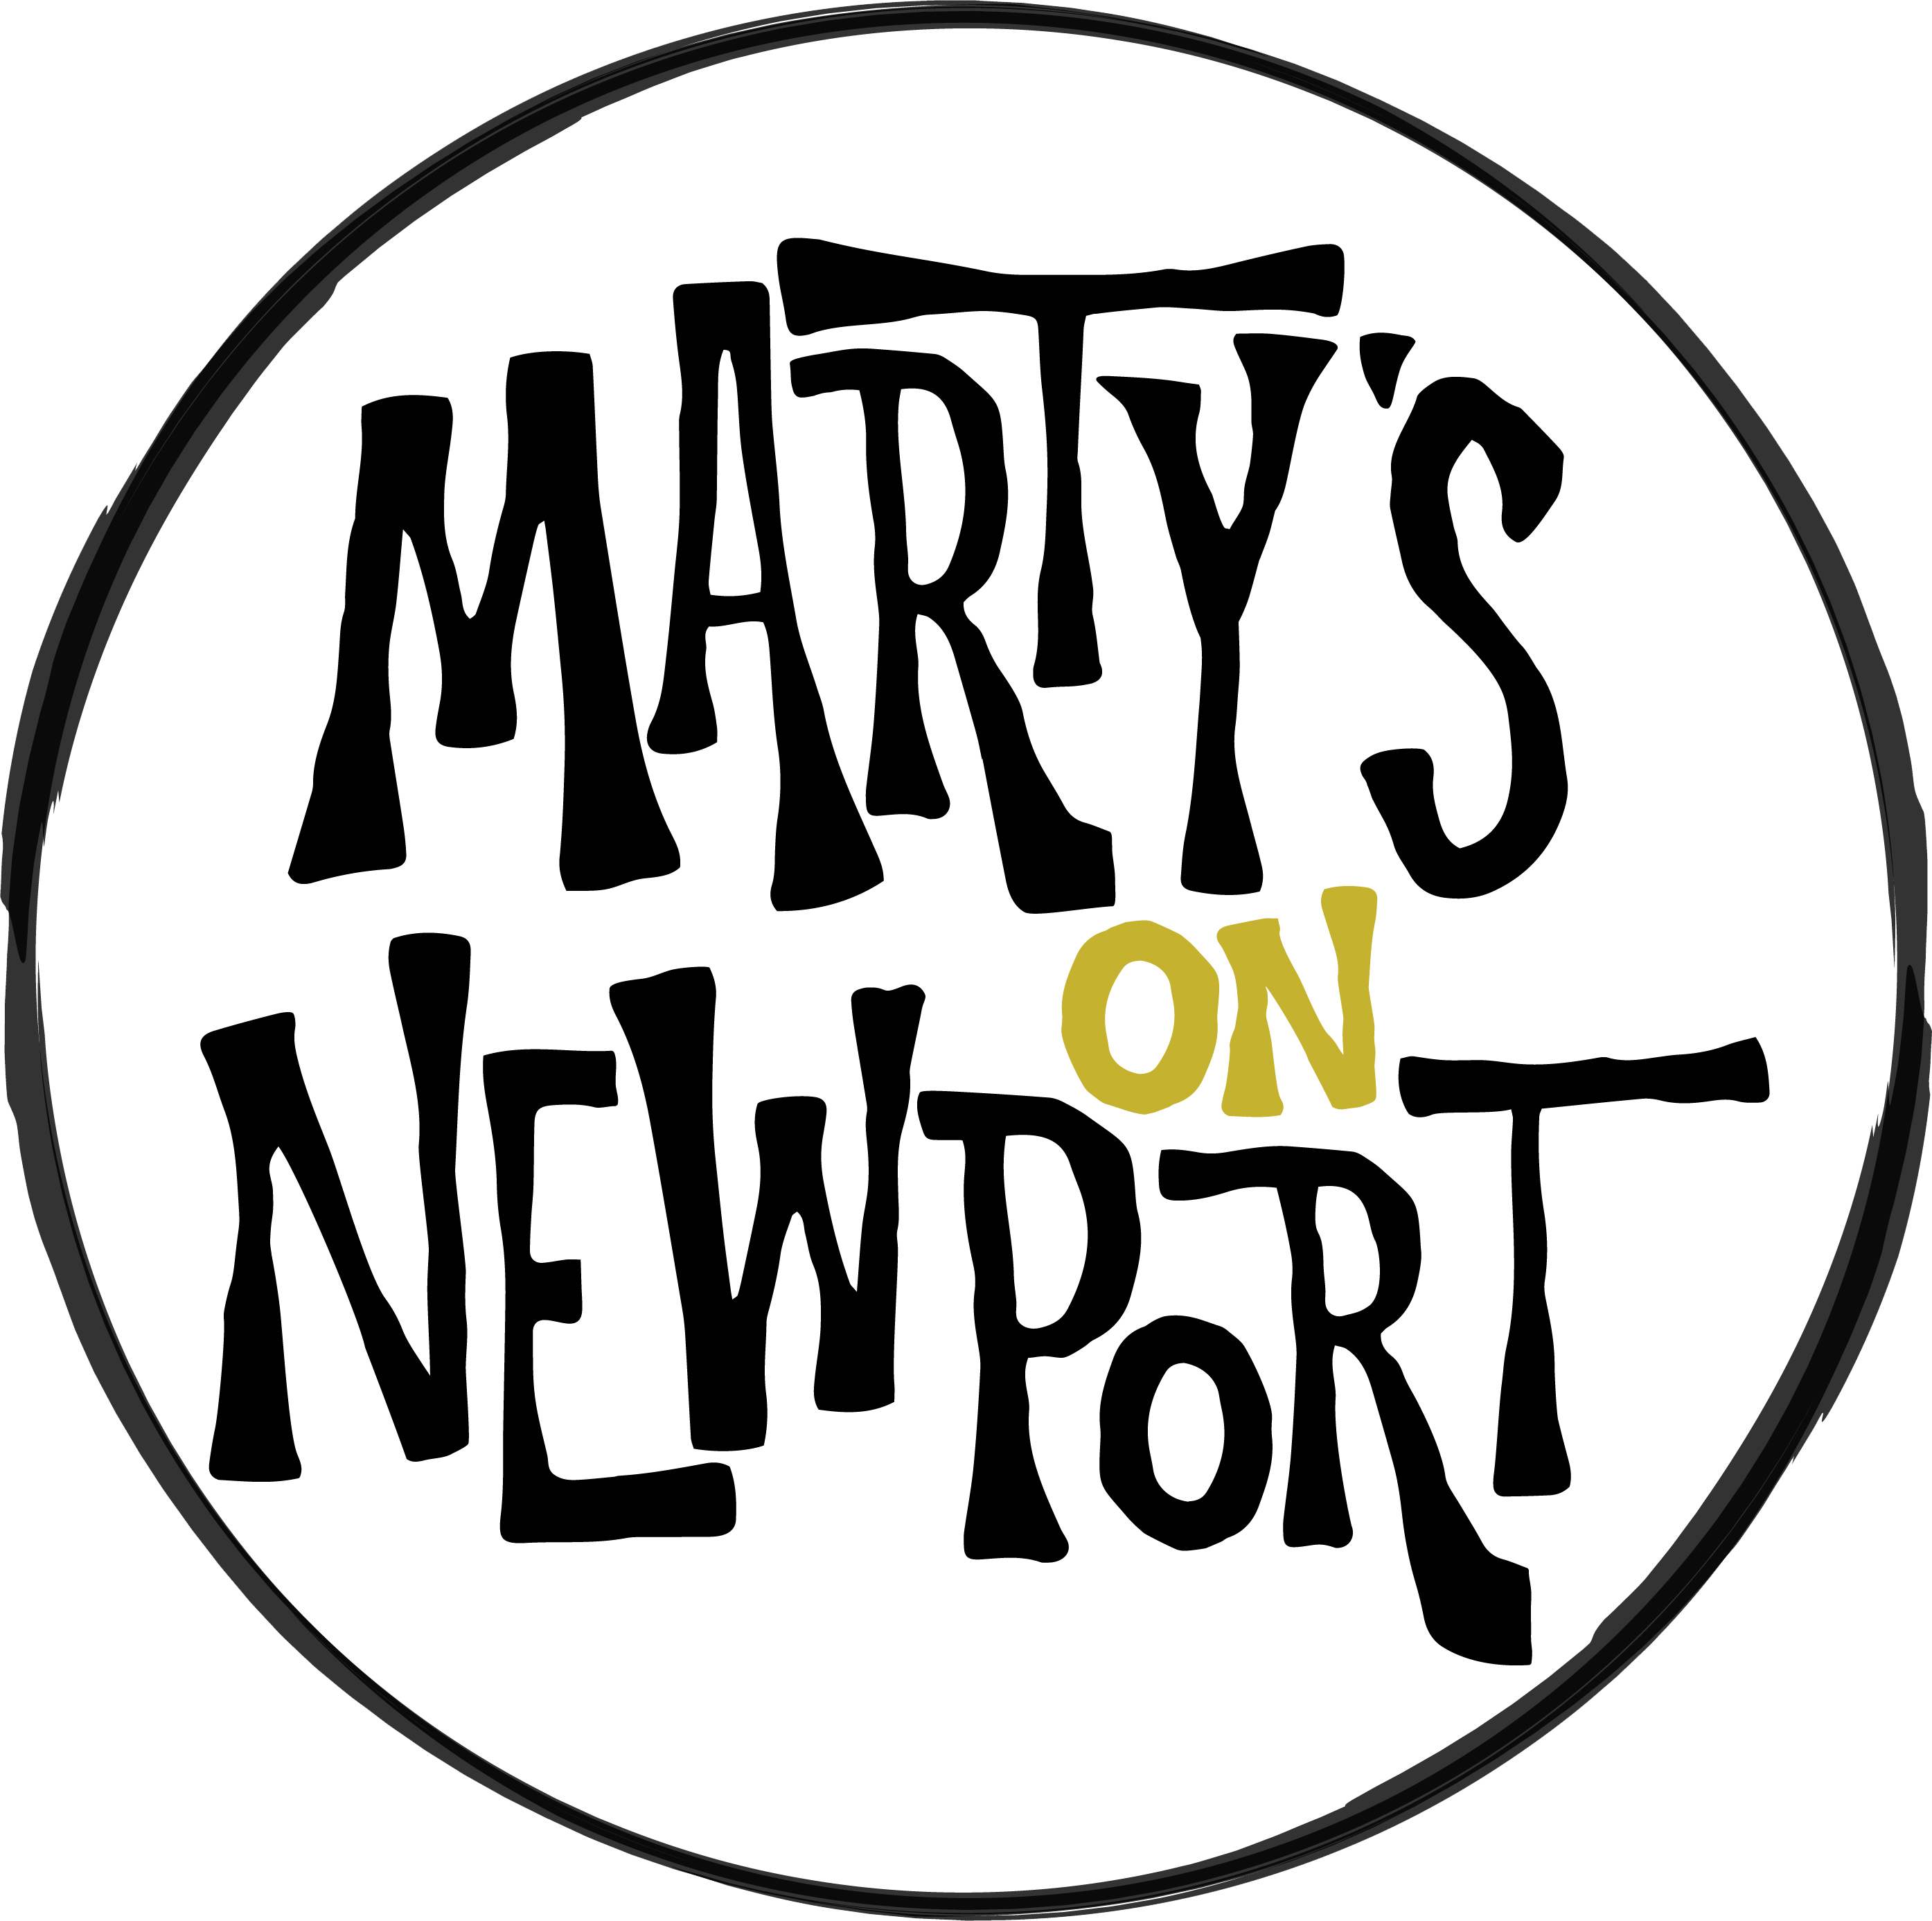 Newport Logo - Shows On Newport